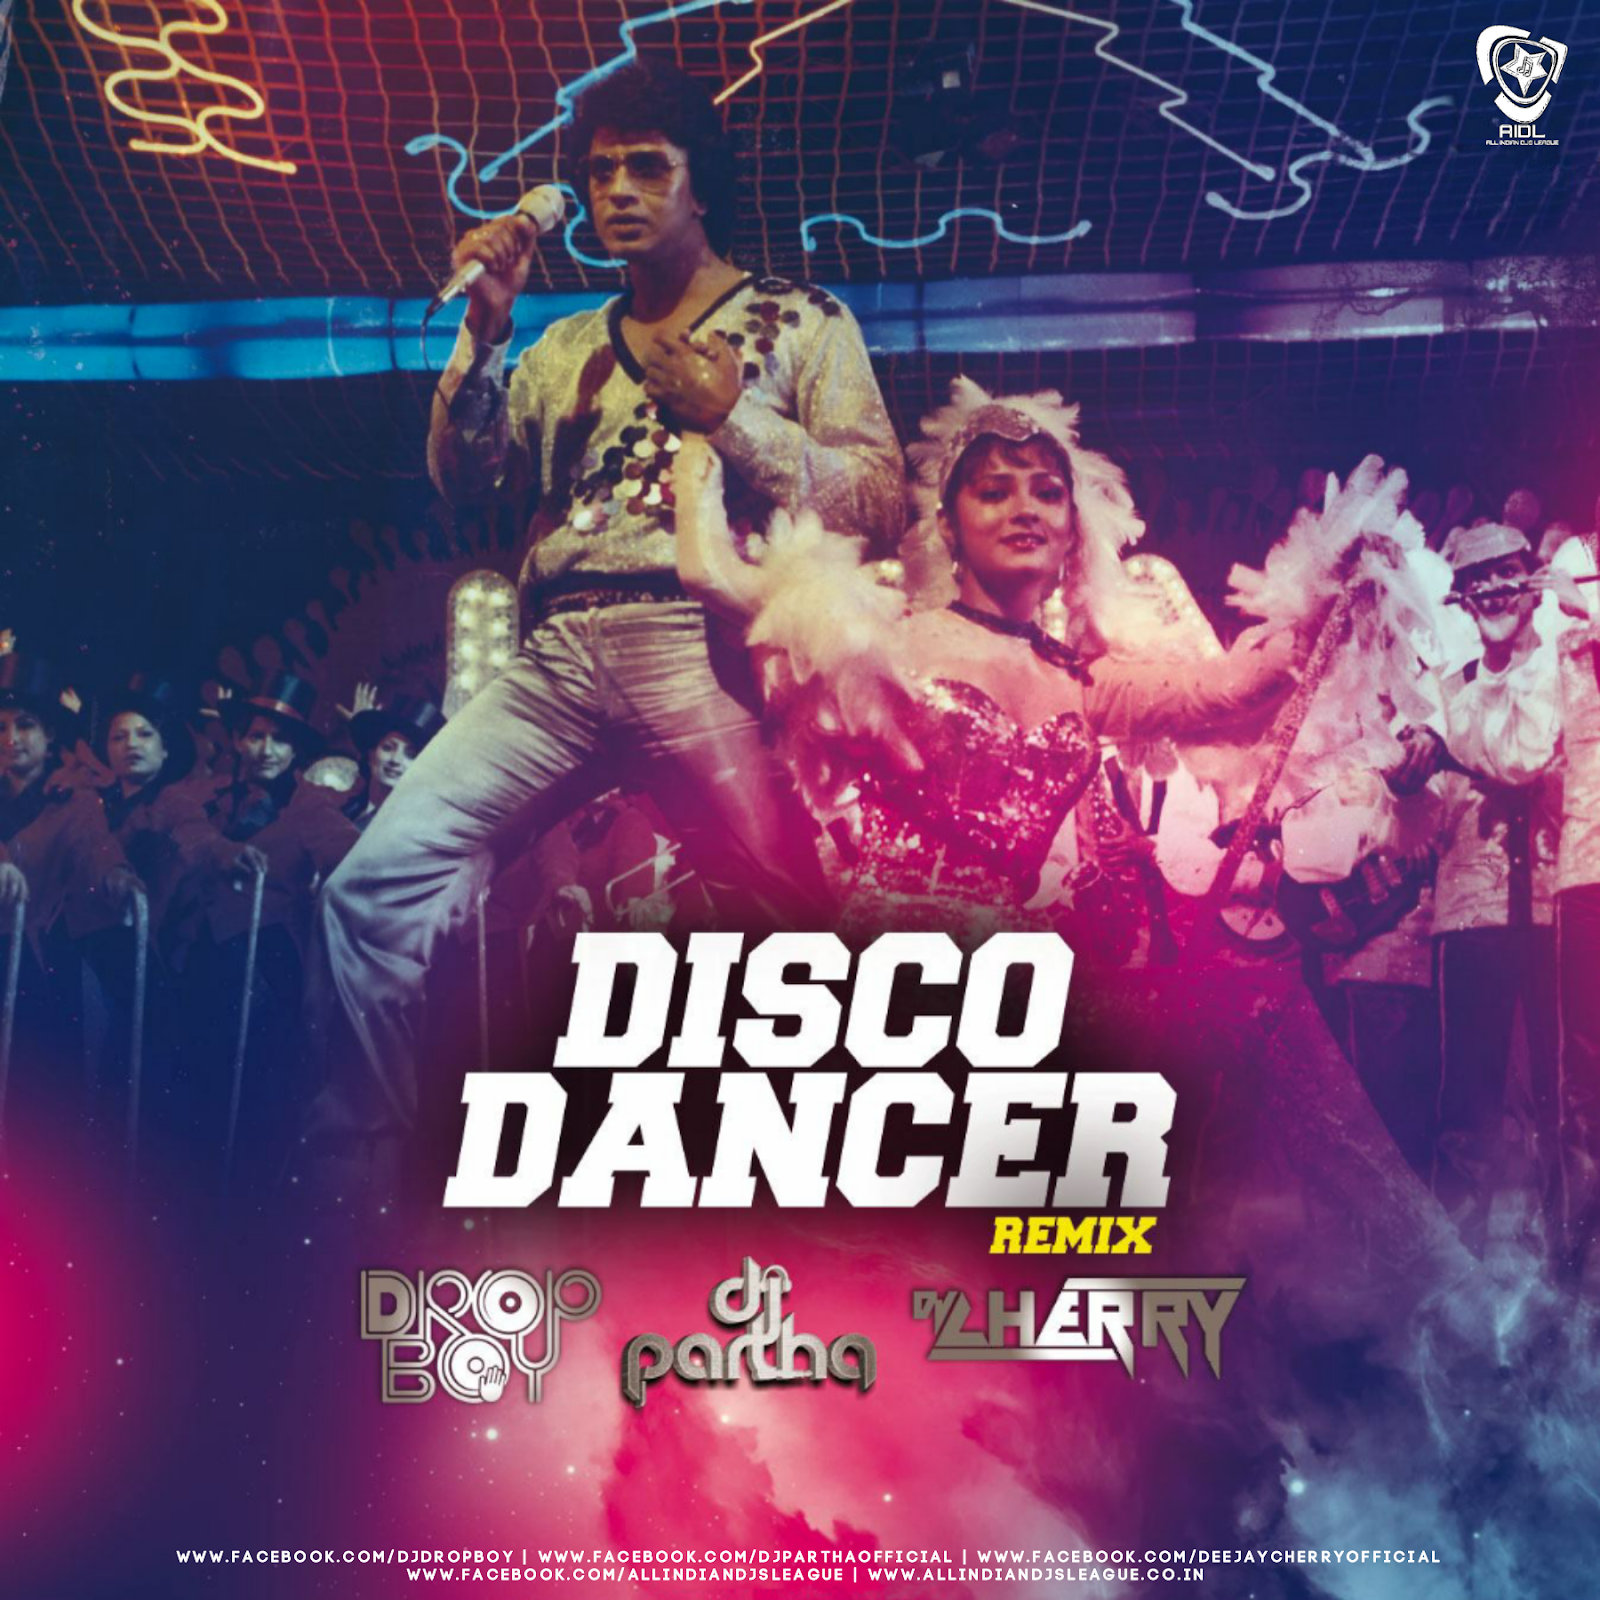 Танцор диско. Диско денсер. «Танцор диско» / Disco Dancer. Танцовщица диско. Dancing remix mp3